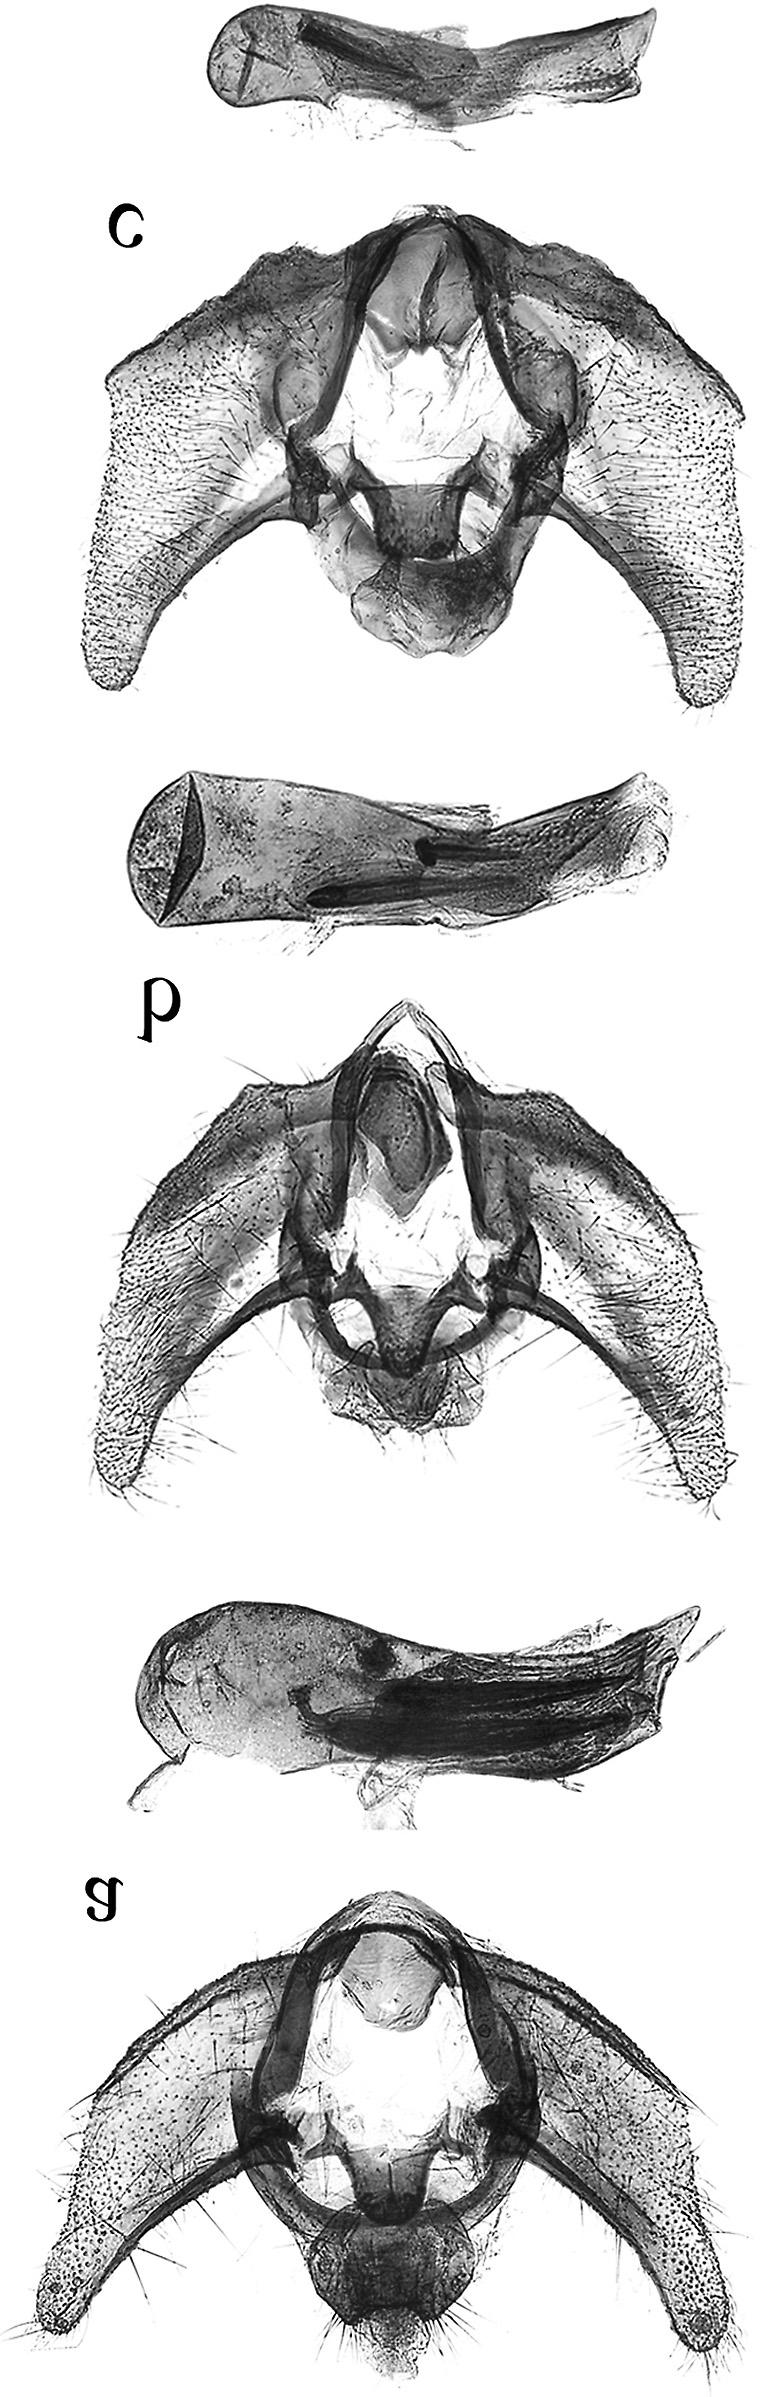 ENTOMOL. FENNICA Vol. 24 Cochylimorpha (Lep.: Tortricidae) in China 199 and the phallus lacks cornuti; the ductus bursae is gradually broadened posteriorly, and the corpus bursae lacks spines.